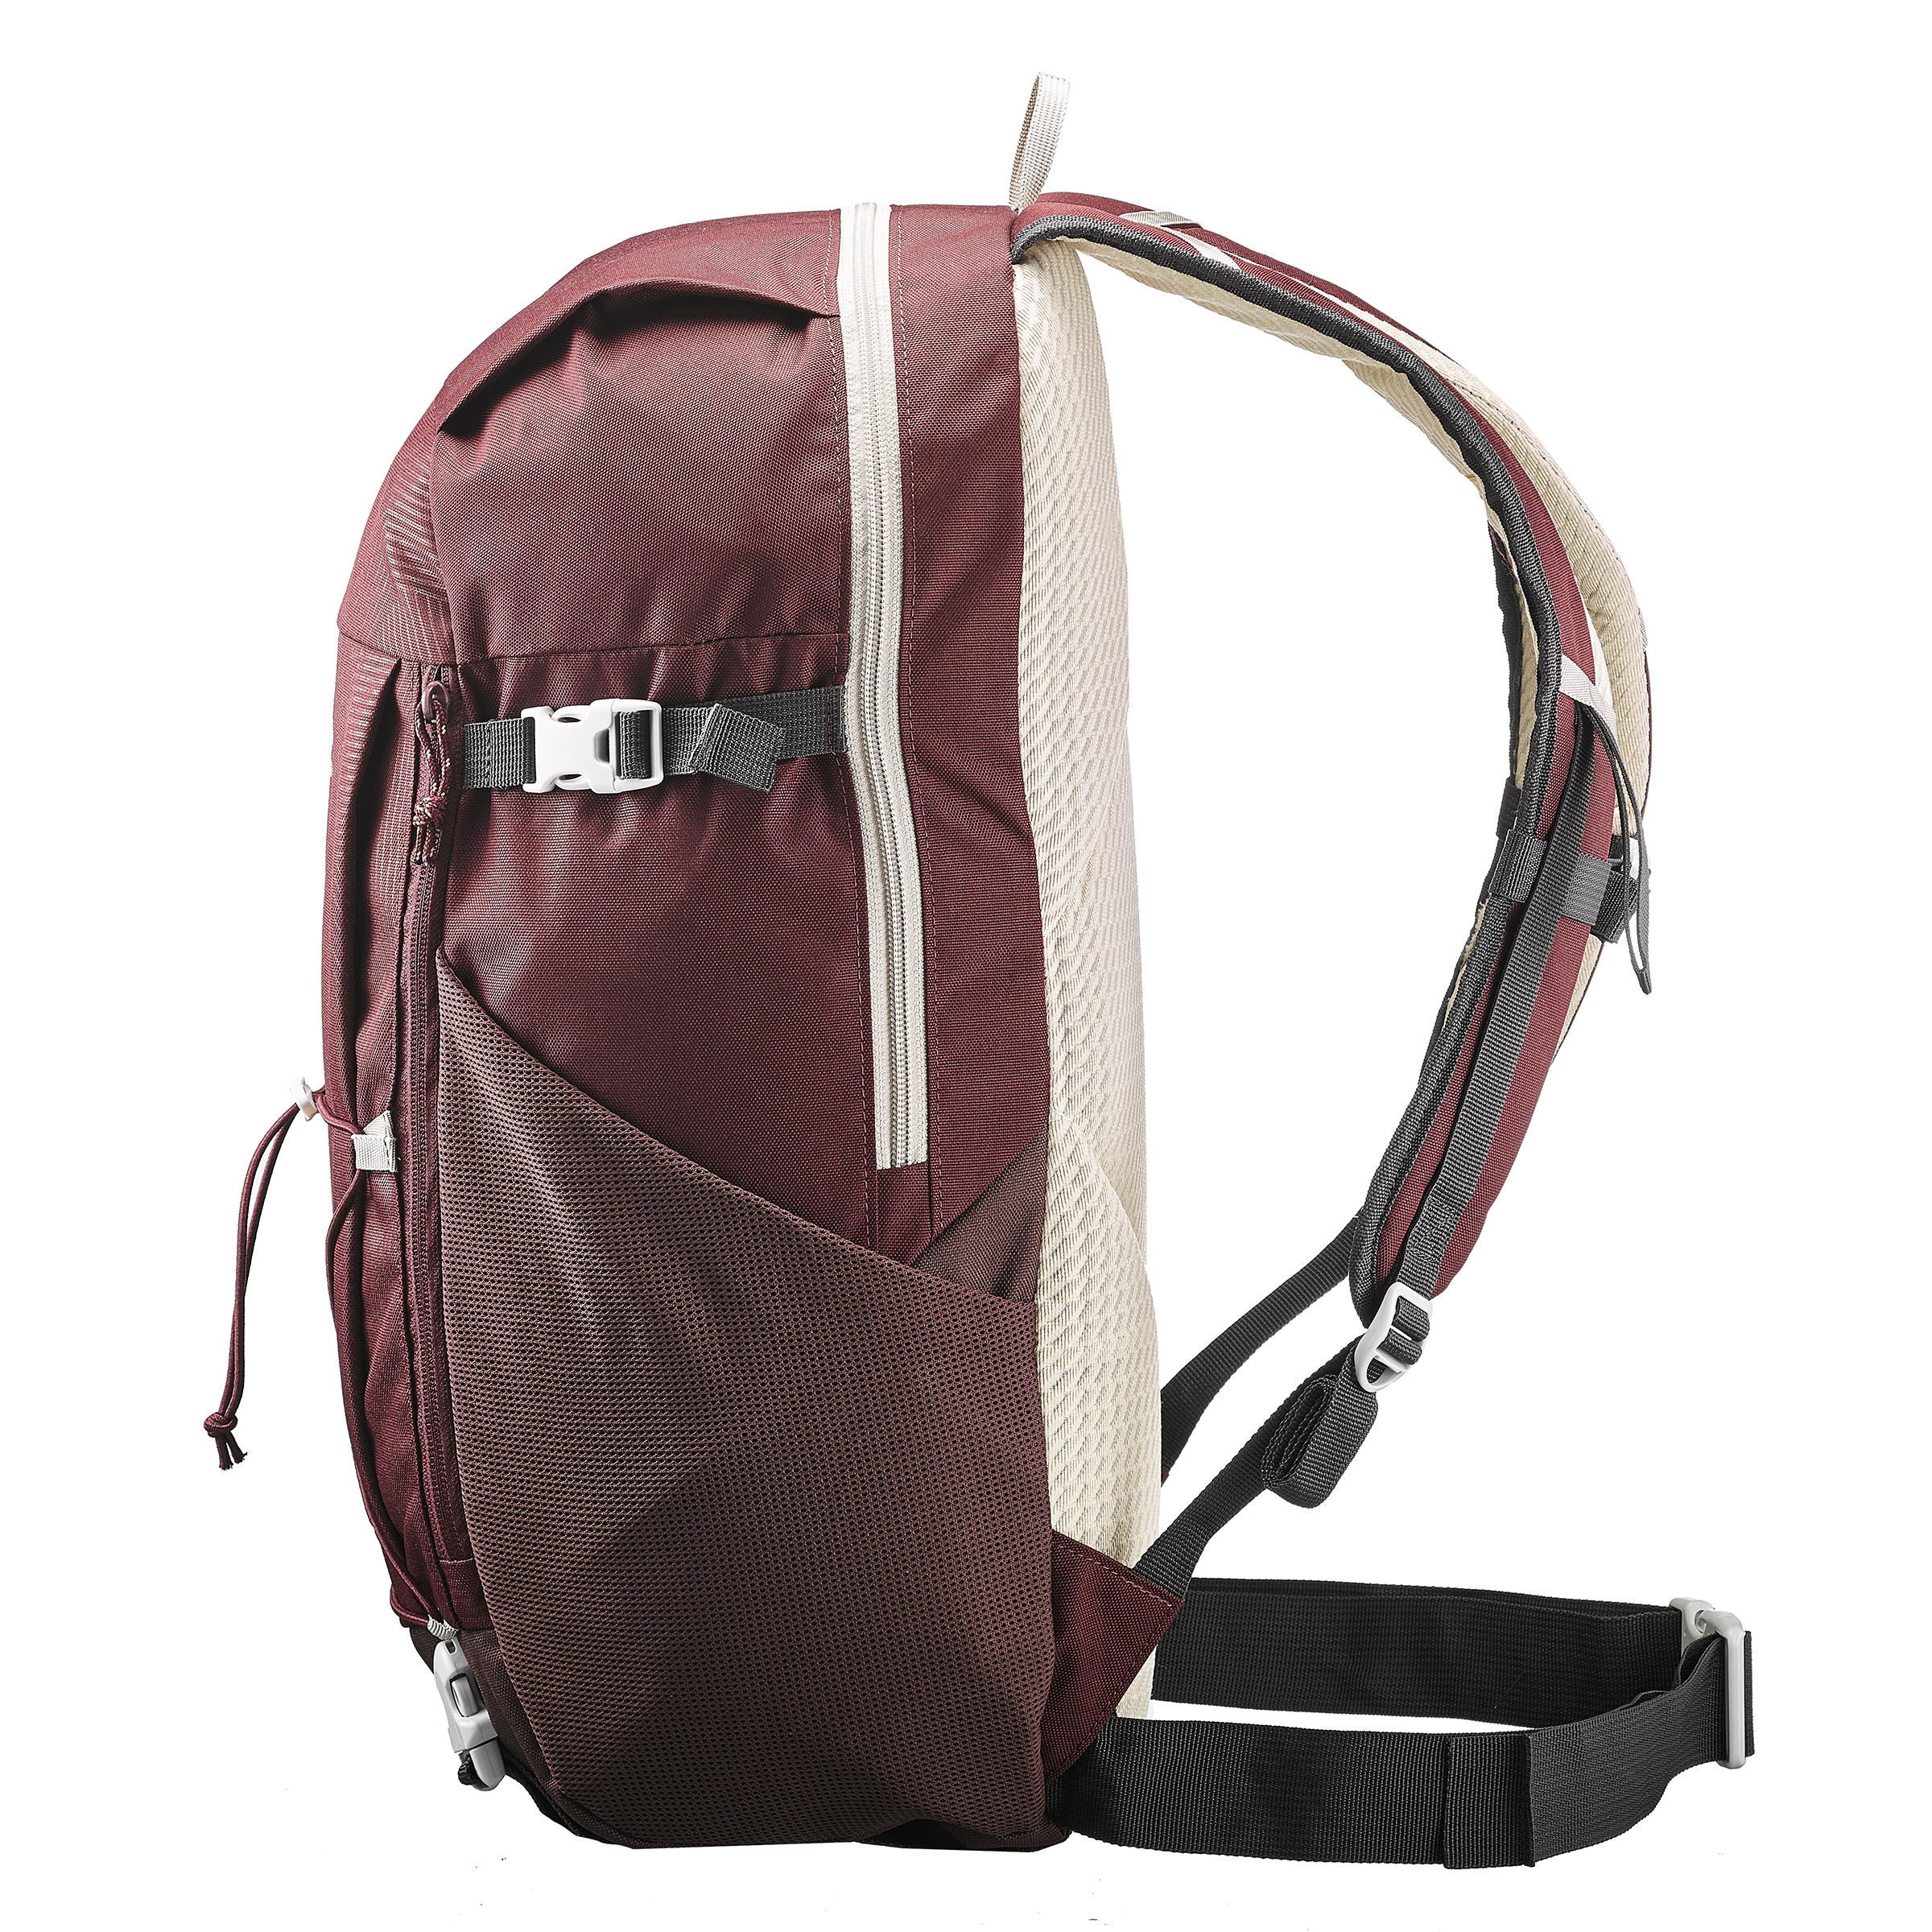 Hiking backpack 30L - NH Arpenaz 100 5/12